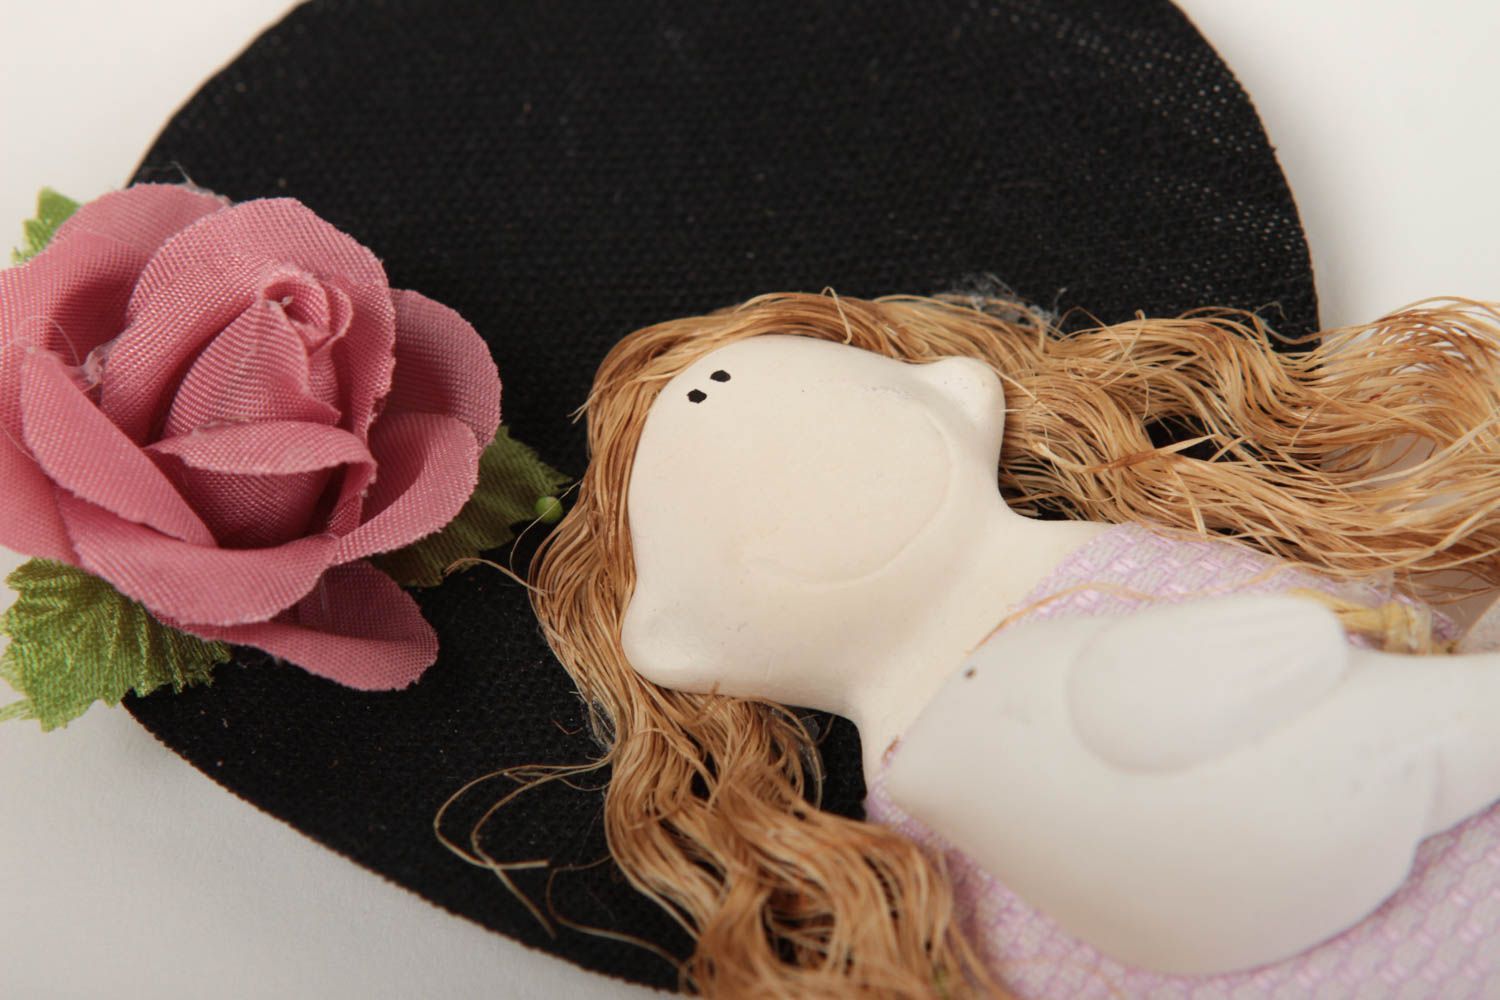 Handmade rag doll fabric interior toy room decor ideas decorative use only photo 3